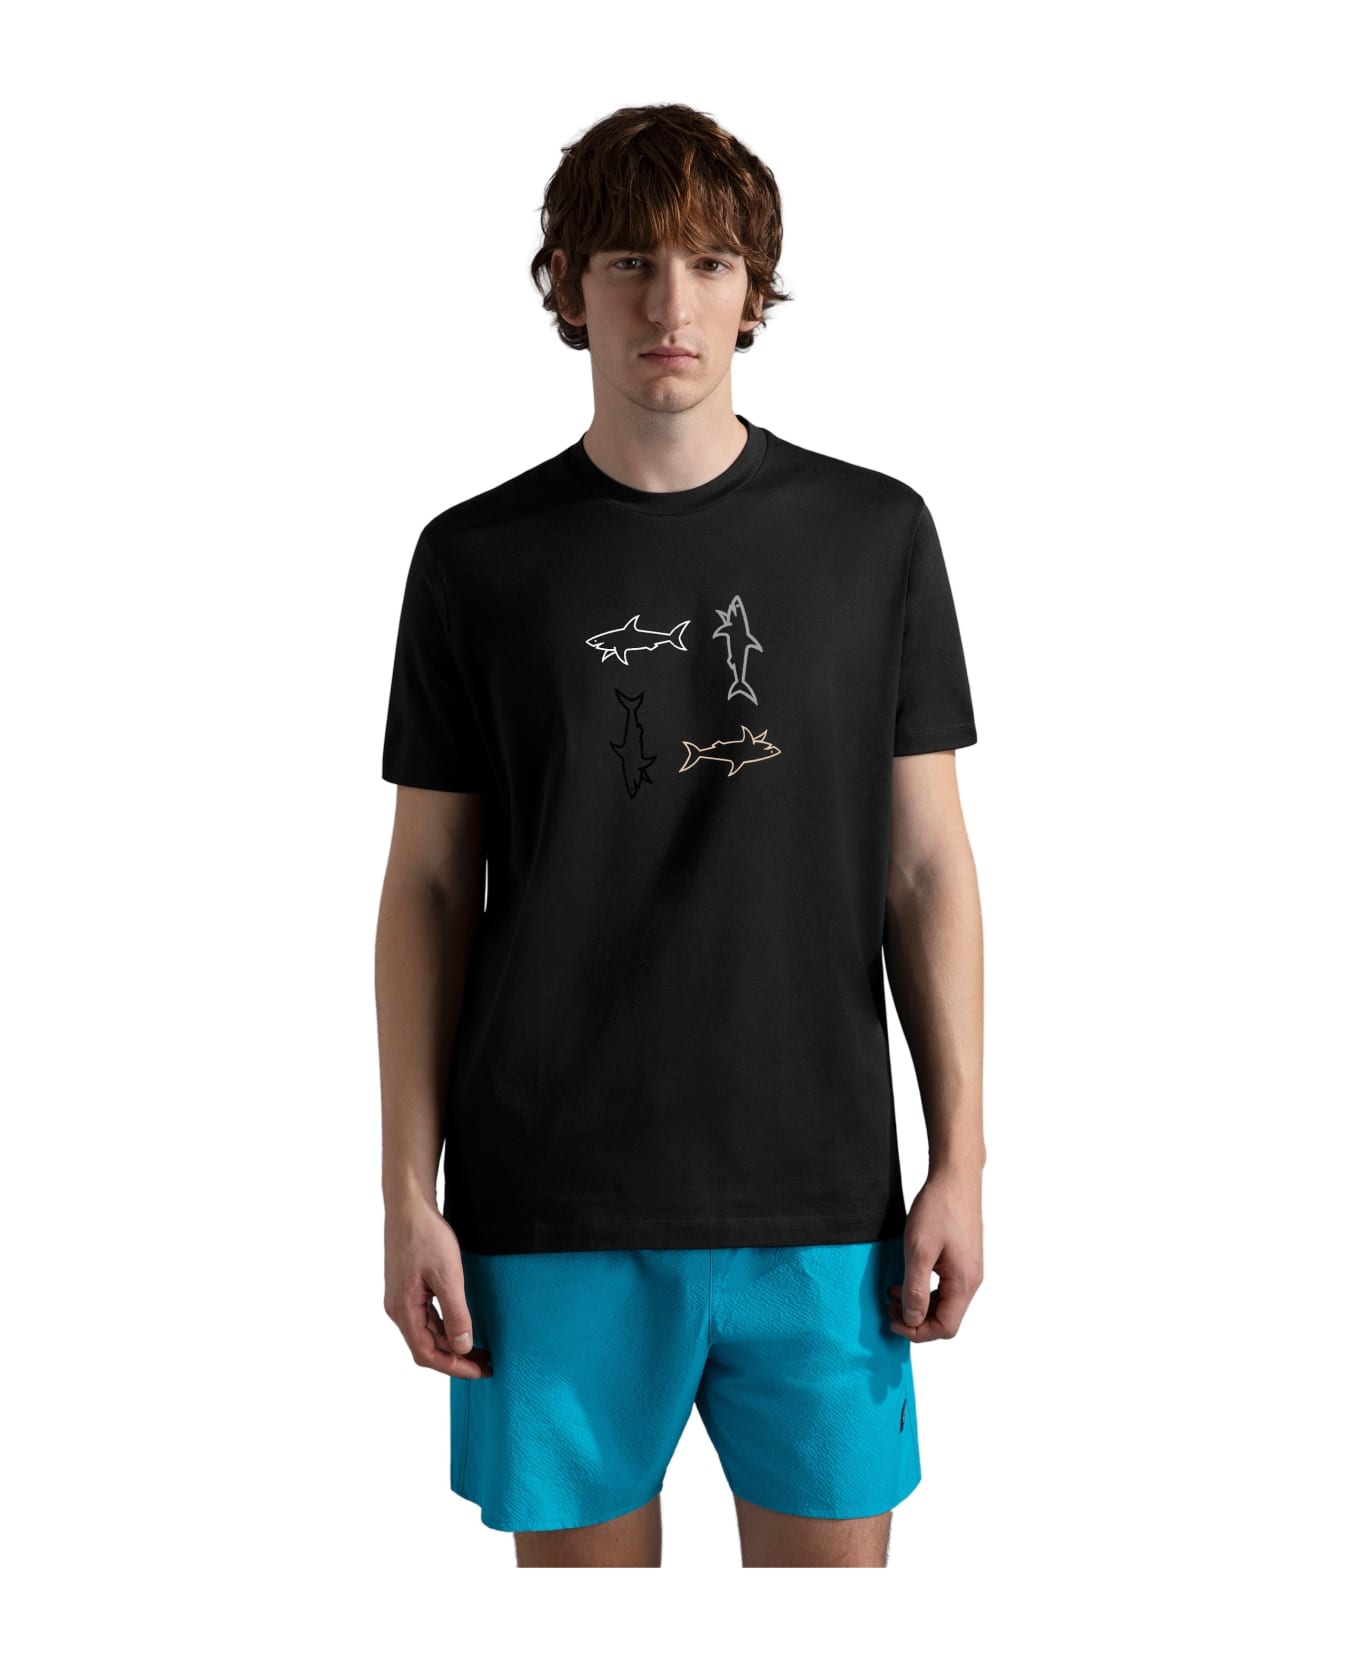 Paul&Shark Tshirt - Black